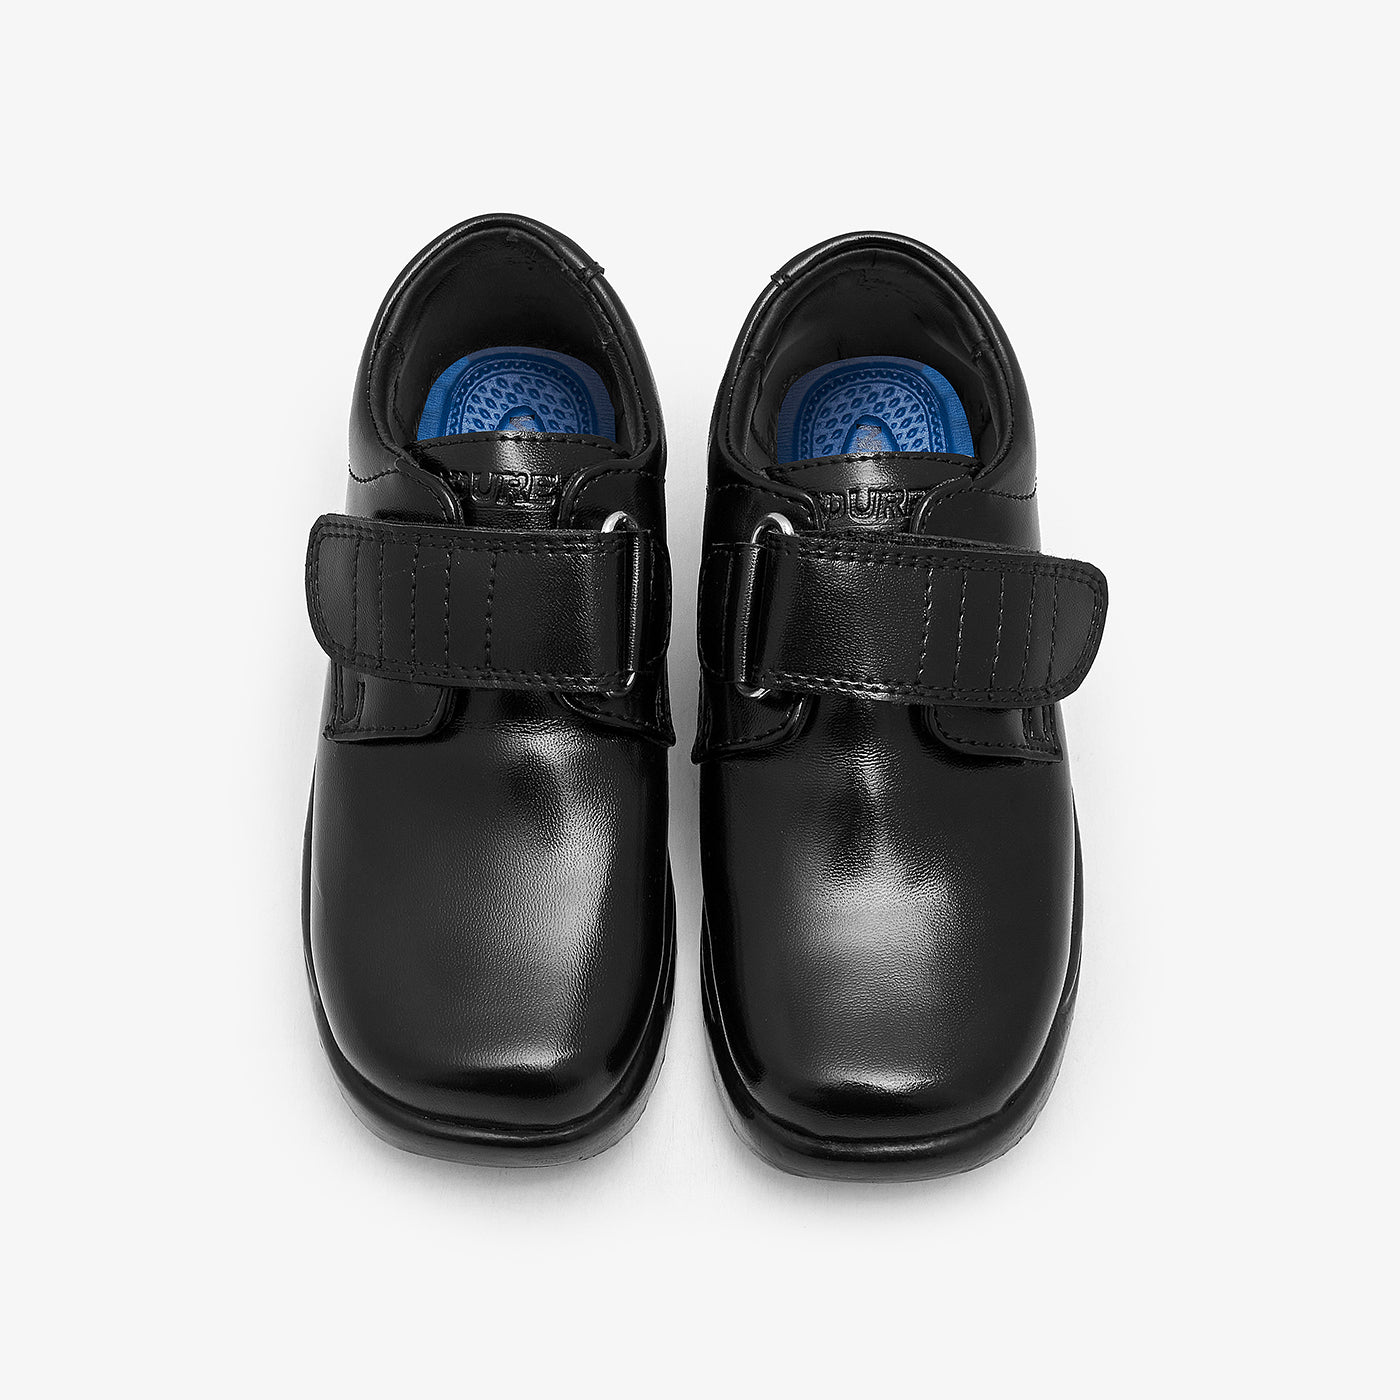 ACTIVE School Shoes- Black Velcro